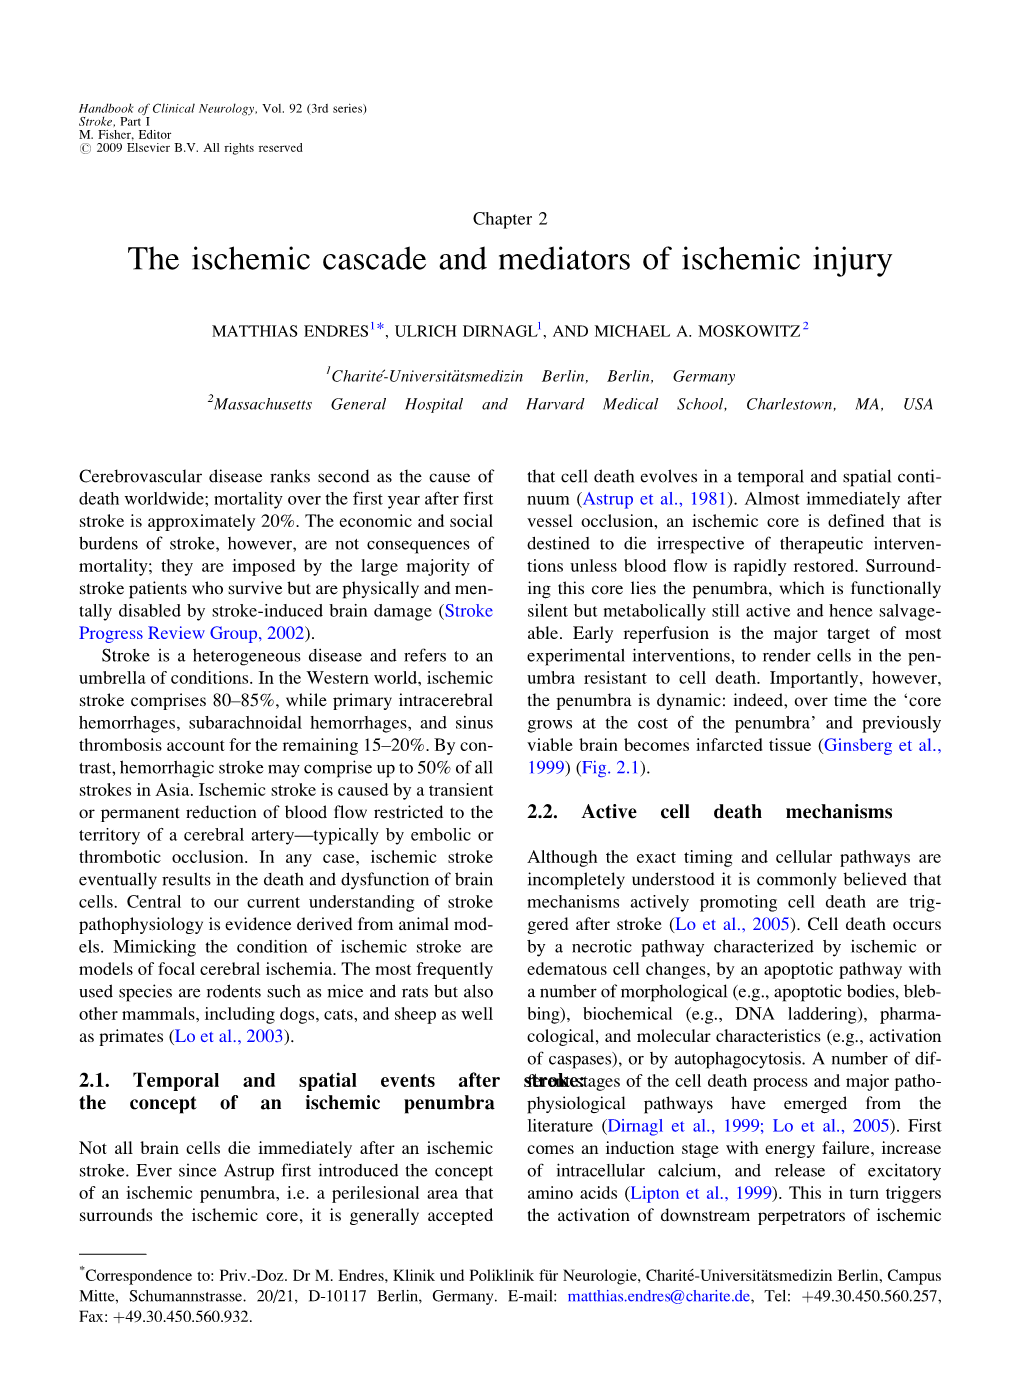 The Ischemic Cascade and Mediators of Ischemic Injury